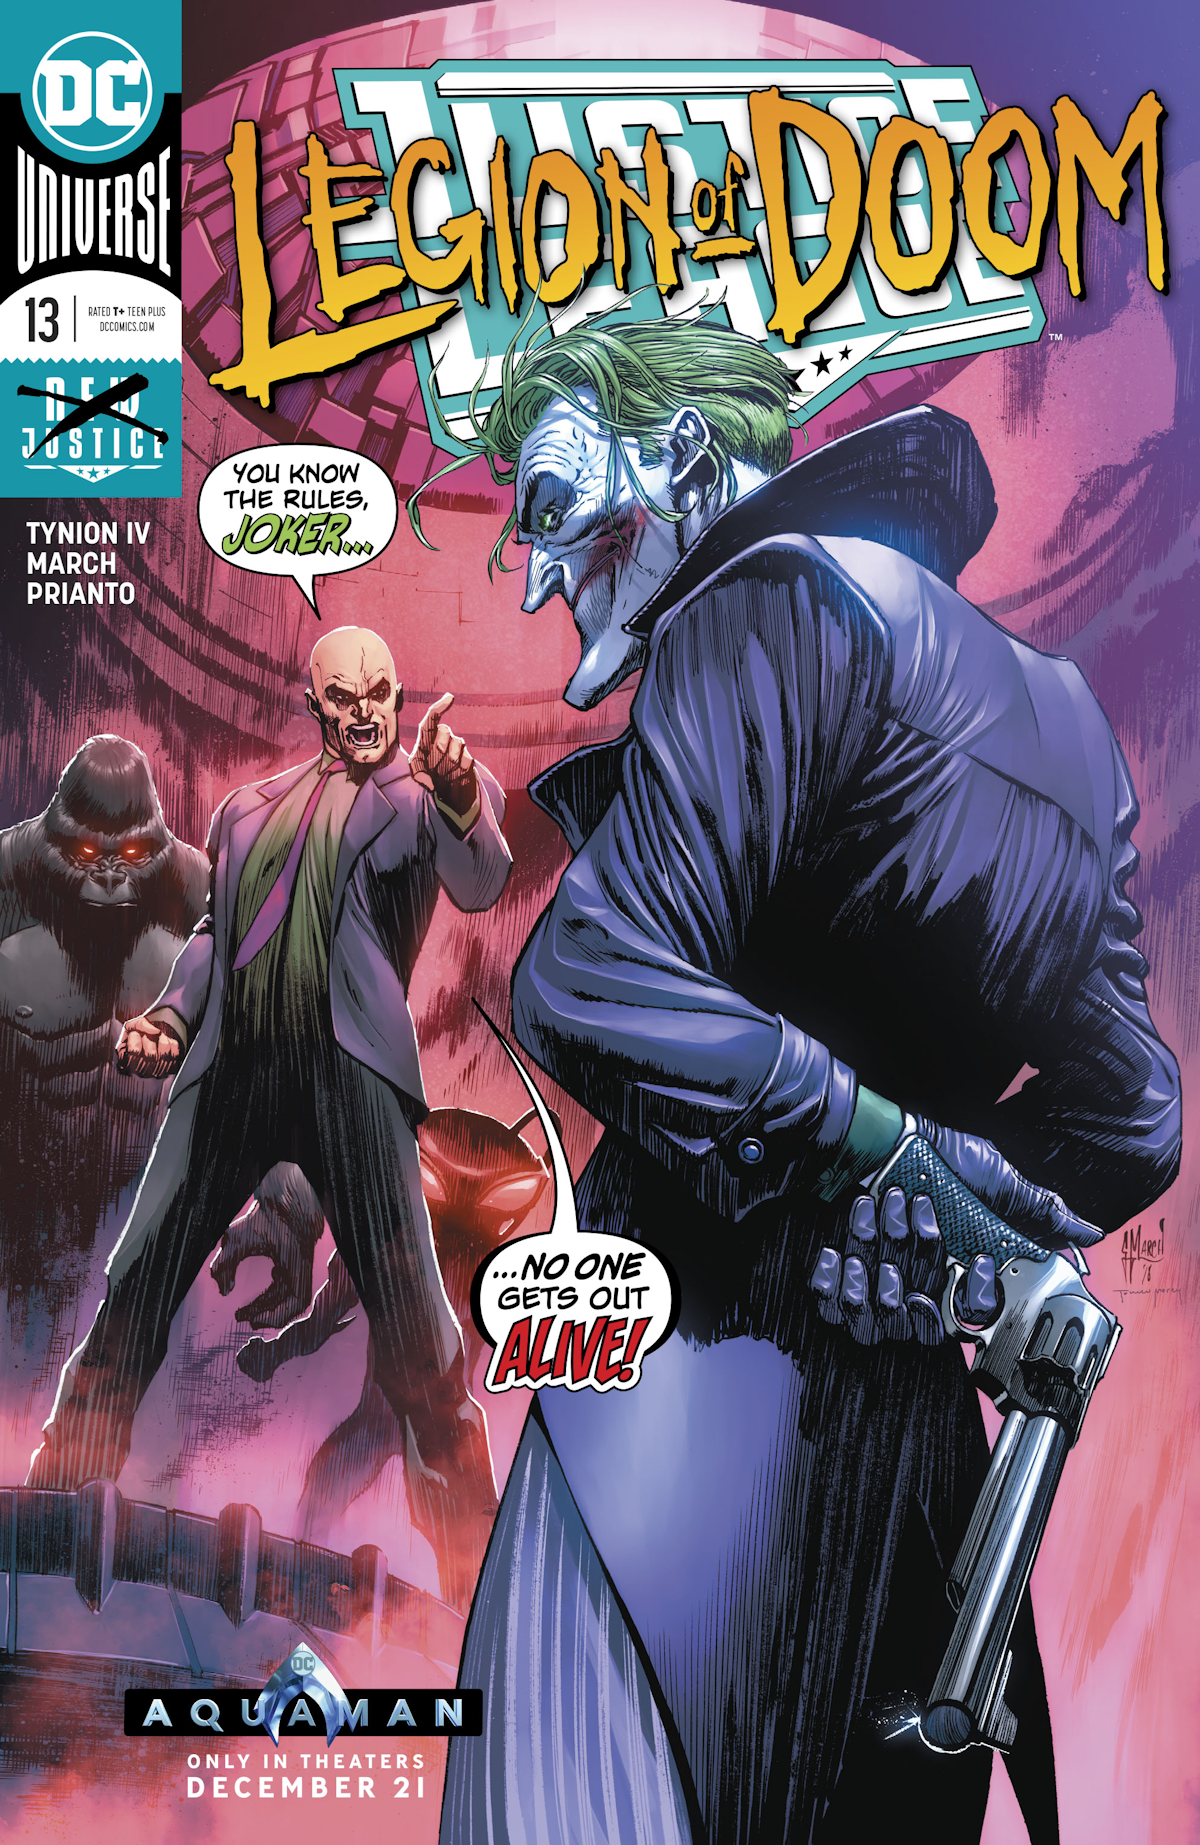 Justice League Vol. 4 13 (Cover A)